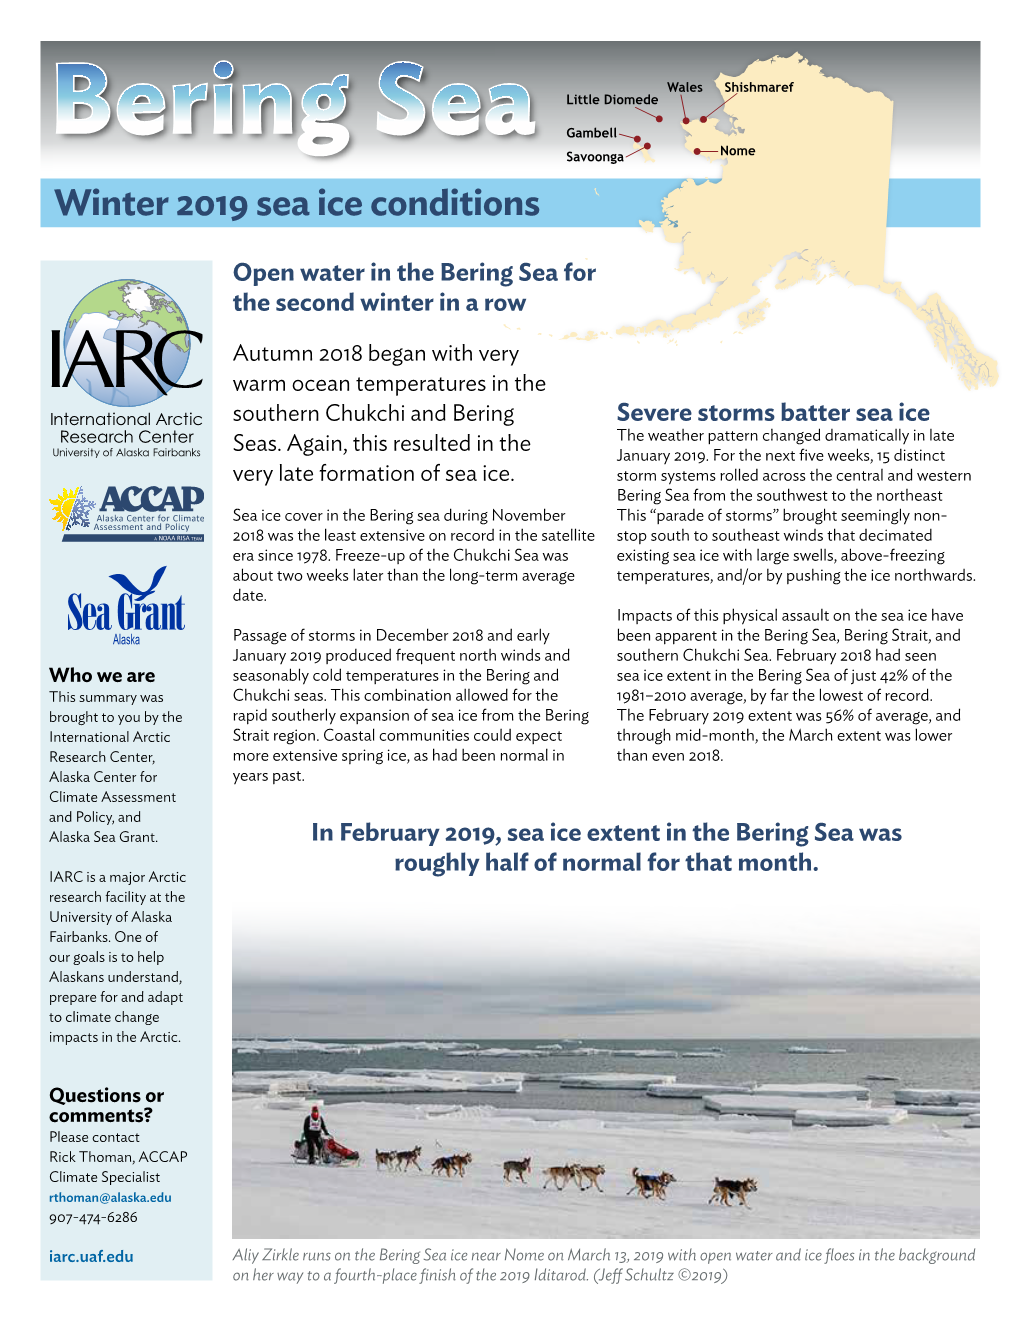 Bering Sea Nome Savoonga Winter 2019 Sea Ice Conditions